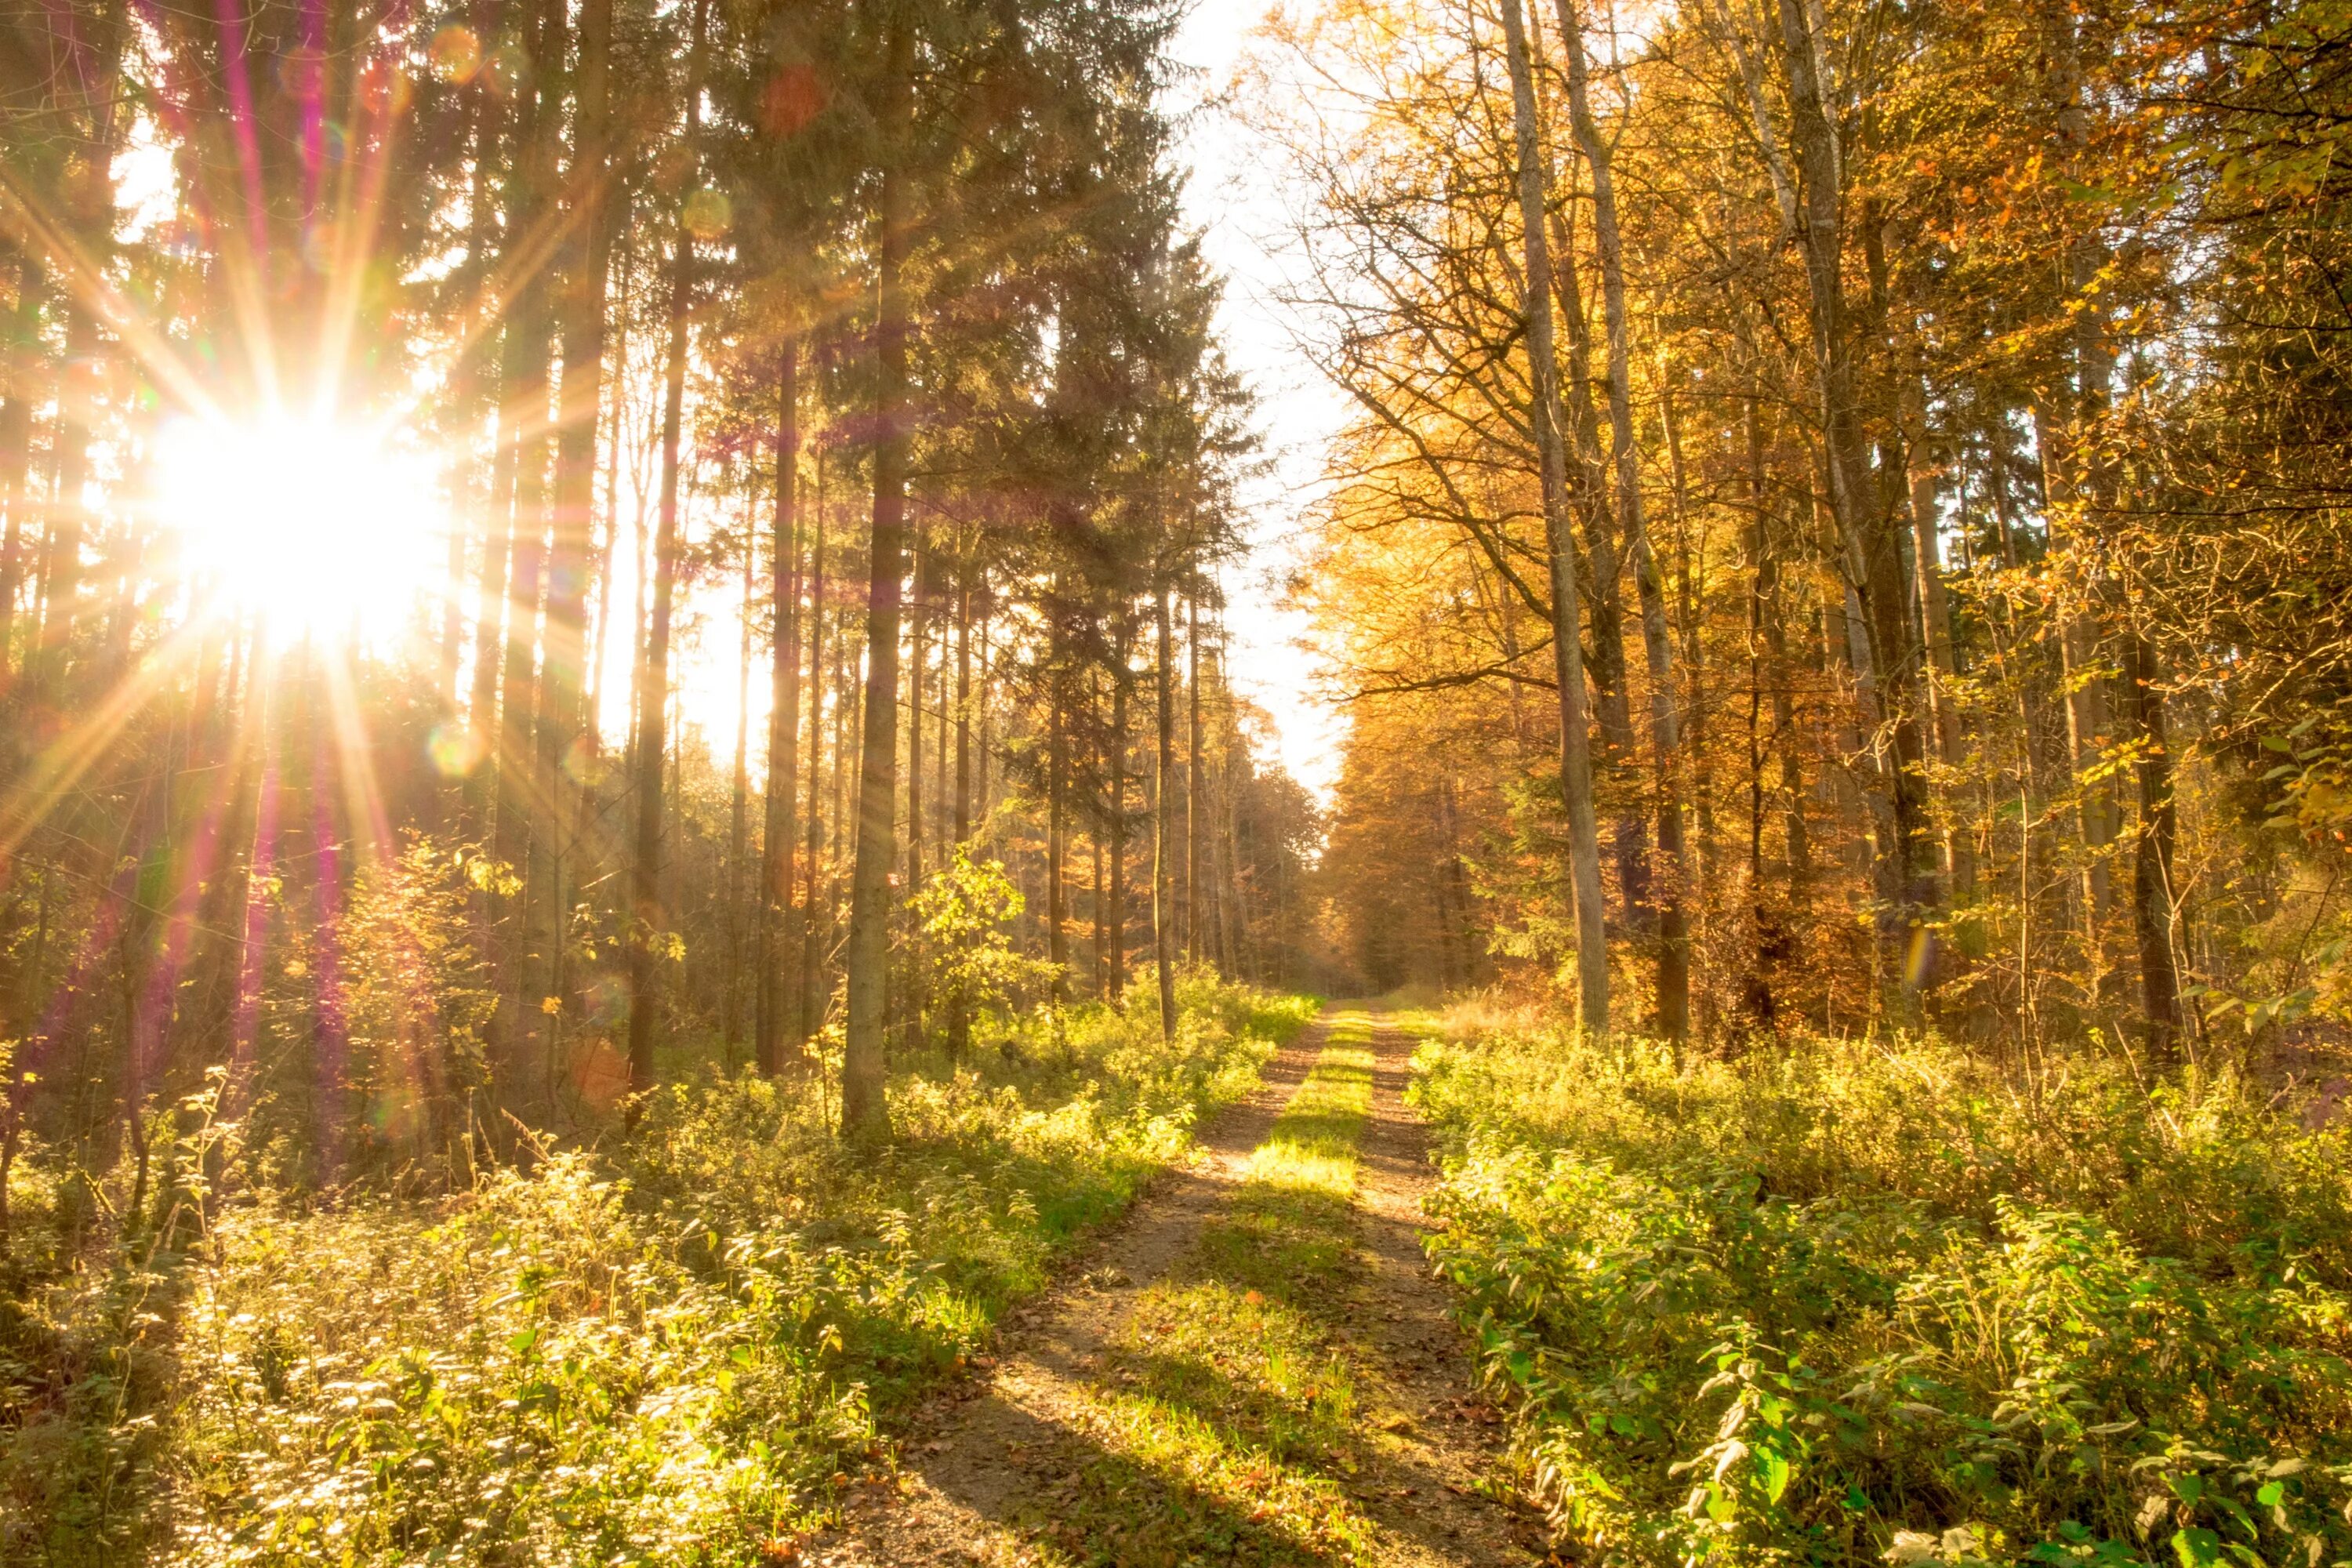 Лето это солнца луч. "Солнце в лесу". Летний лес. Осенний лес солнце. Солнечный пейзаж.